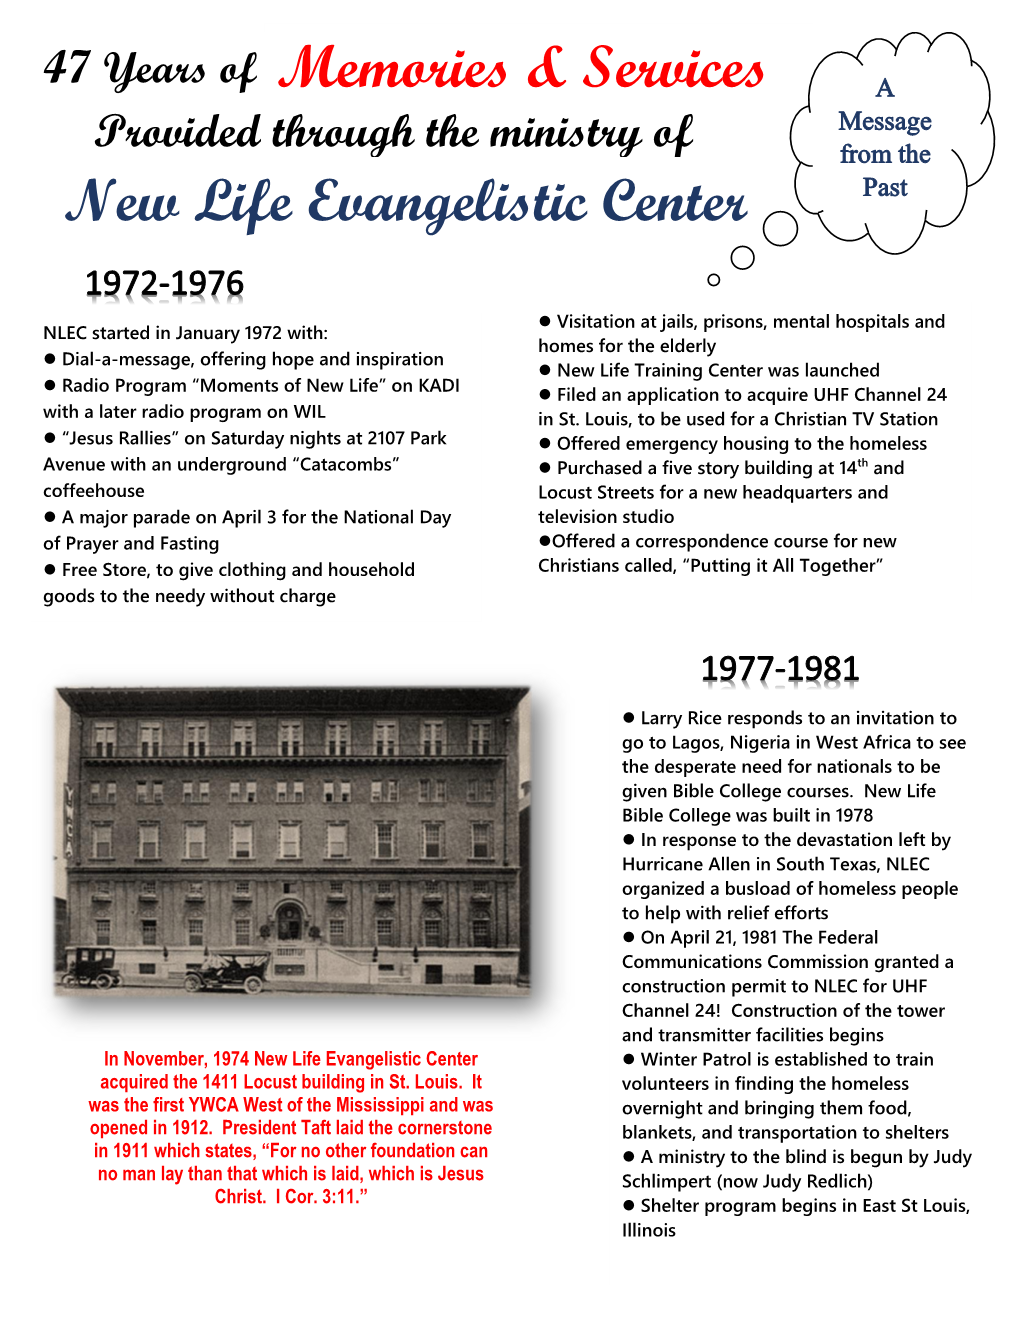 Memories & Services New Life Evangelistic Center